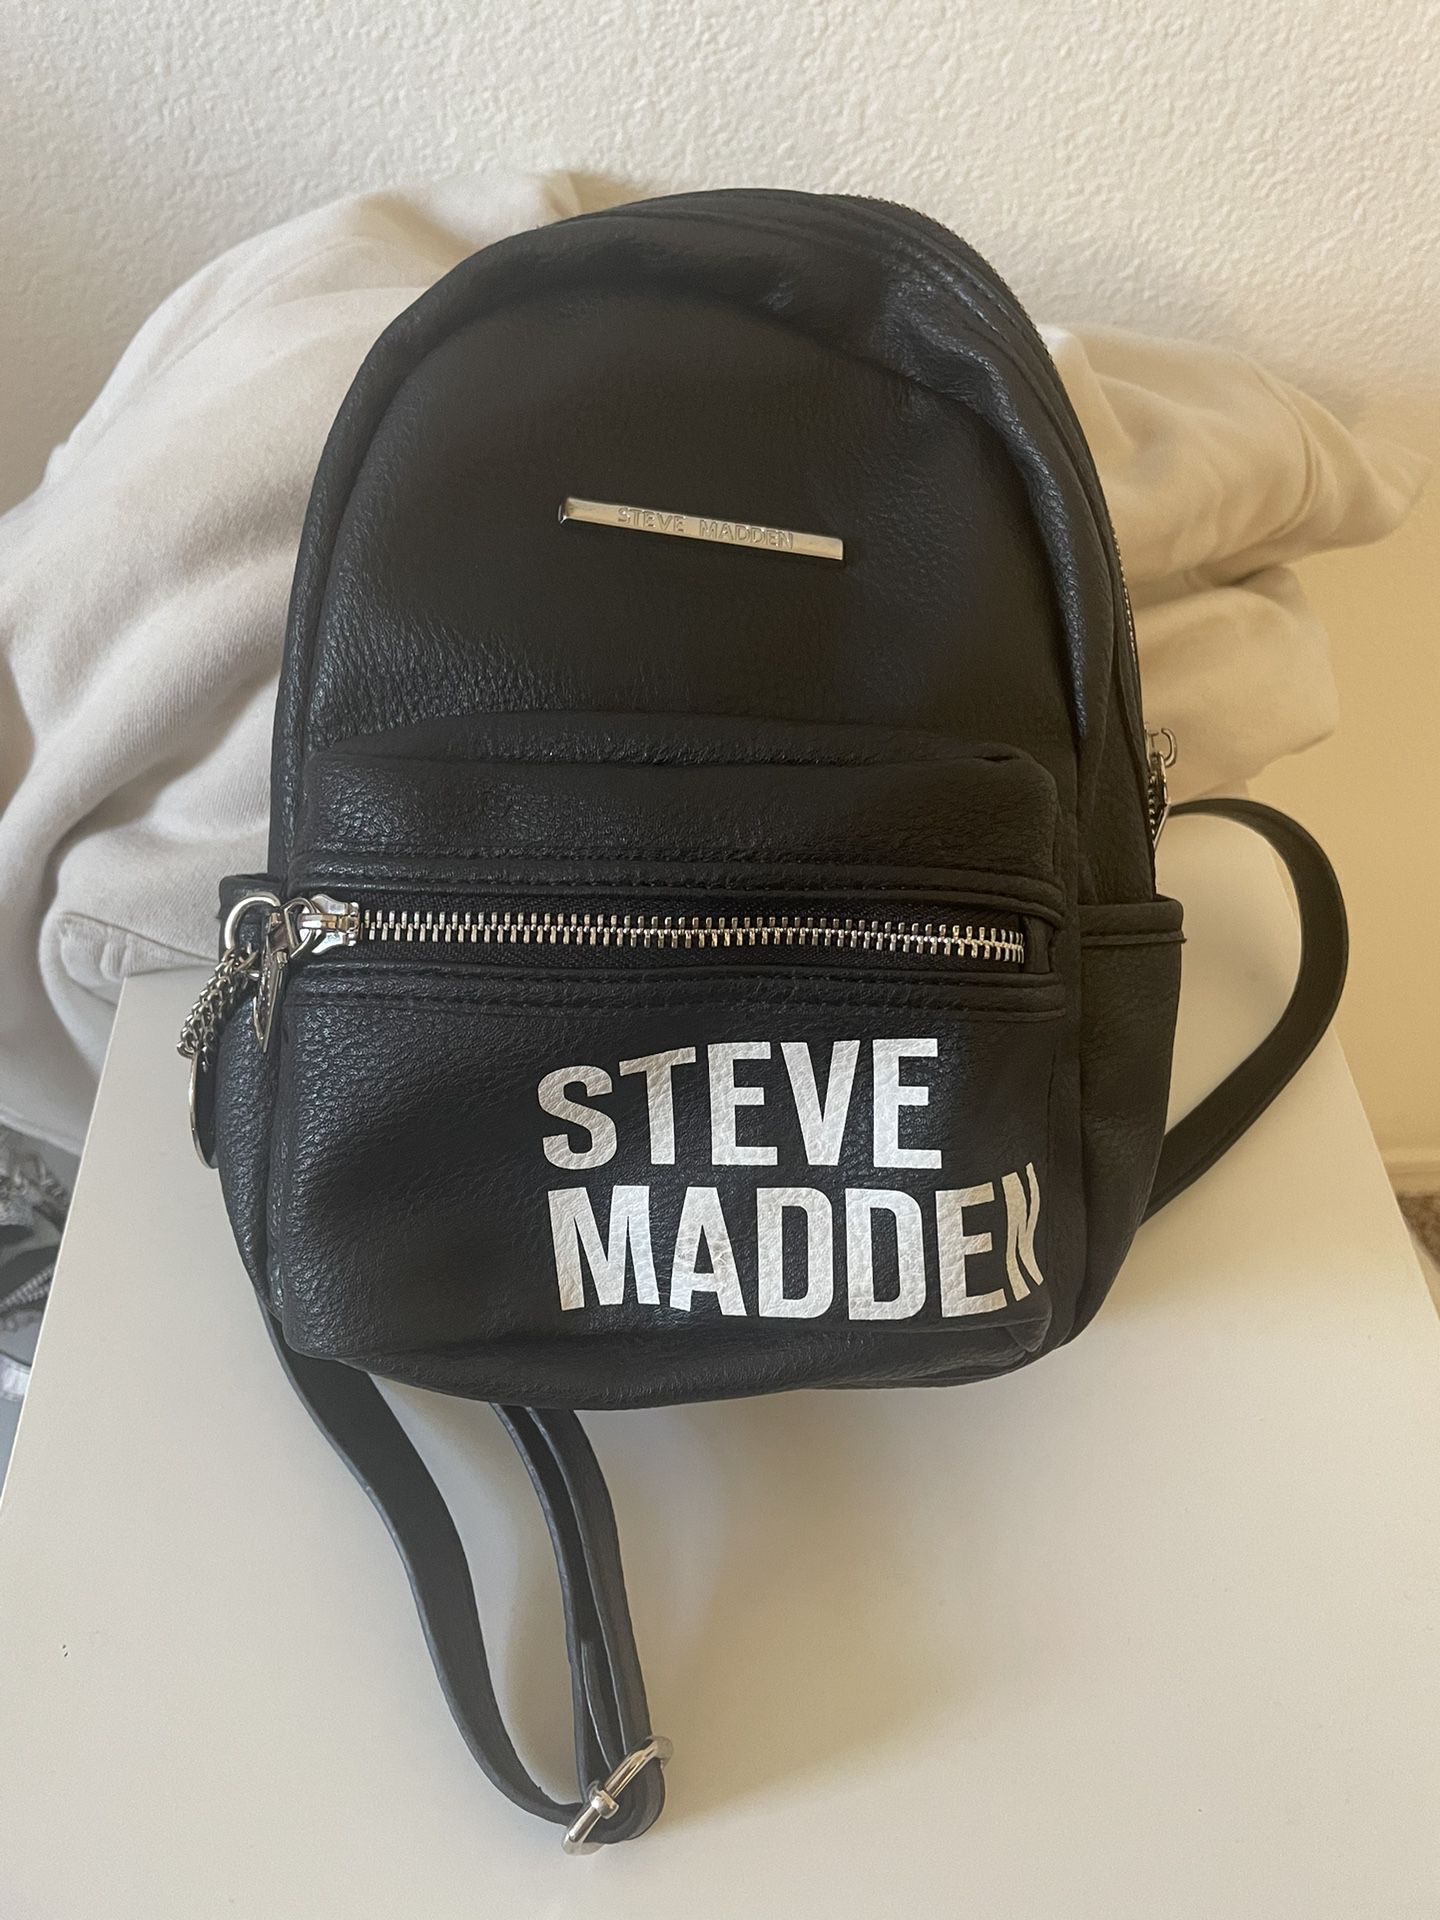 Steve Madden Tote Bag for Sale in Mesa, AZ - OfferUp